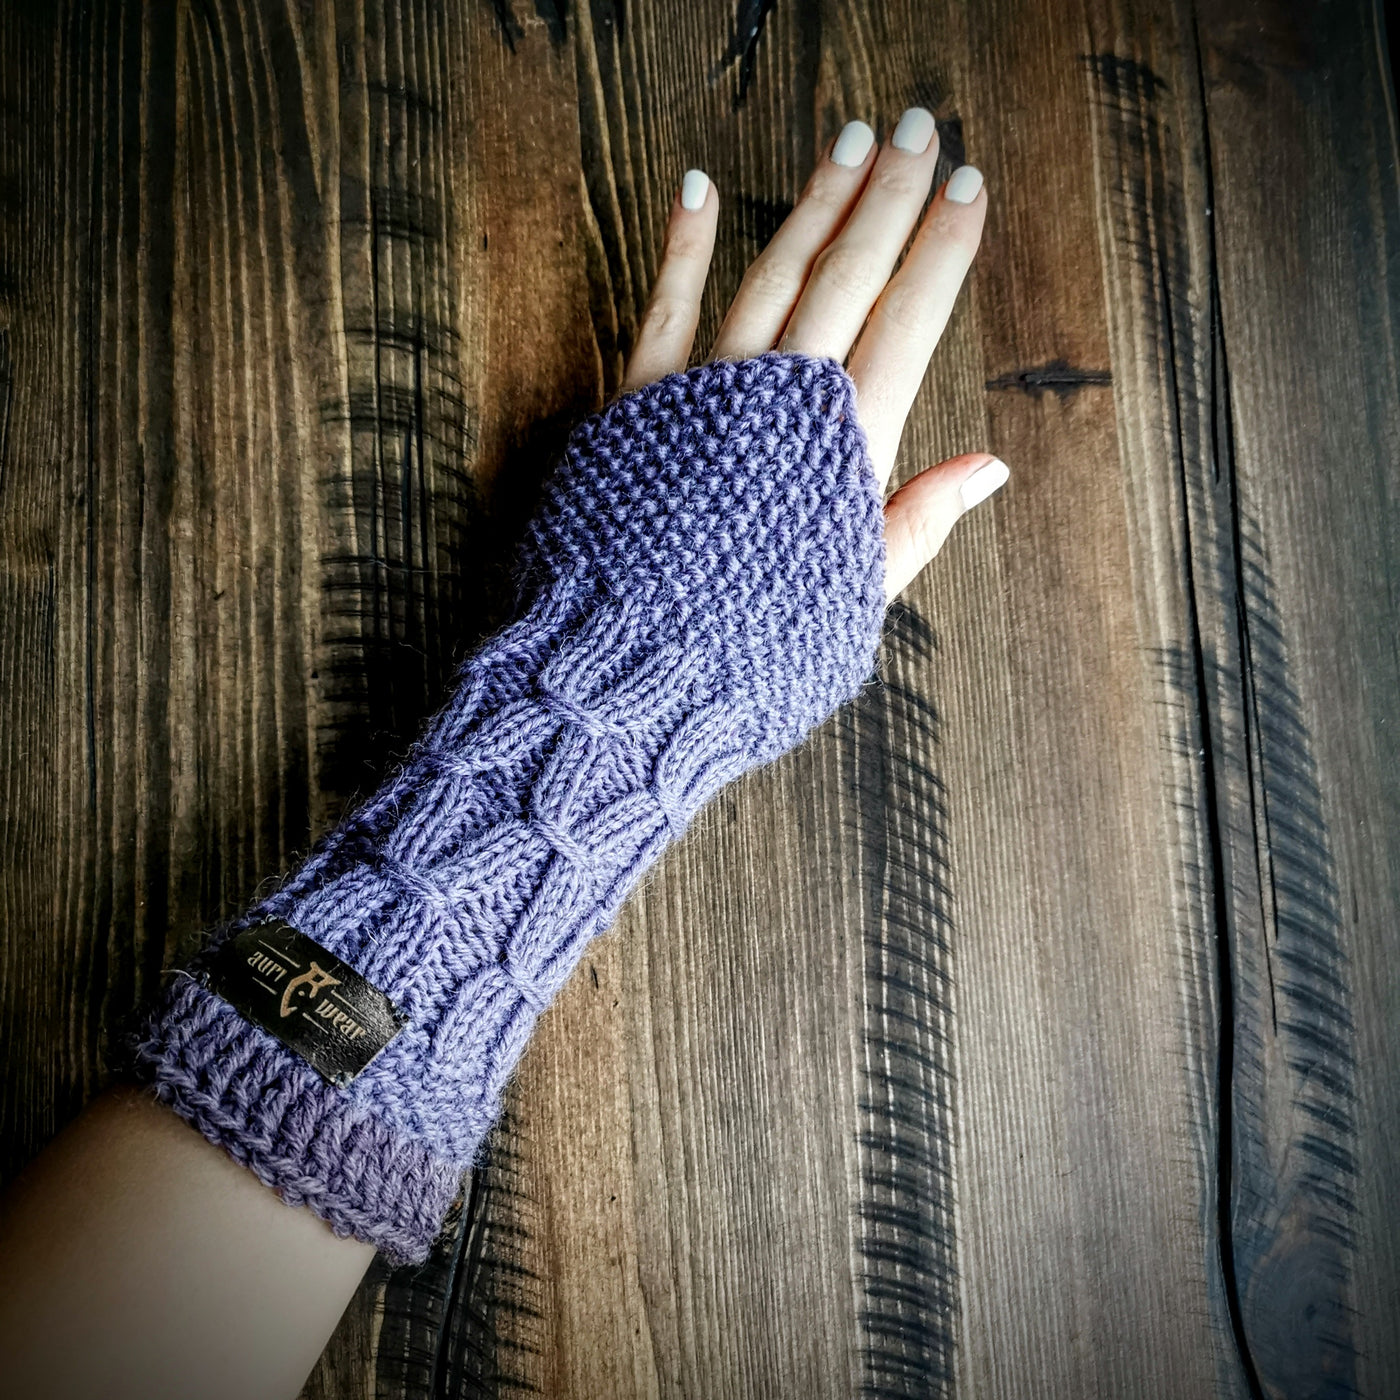 Handmade knitted dreamy lavender wrist warmers